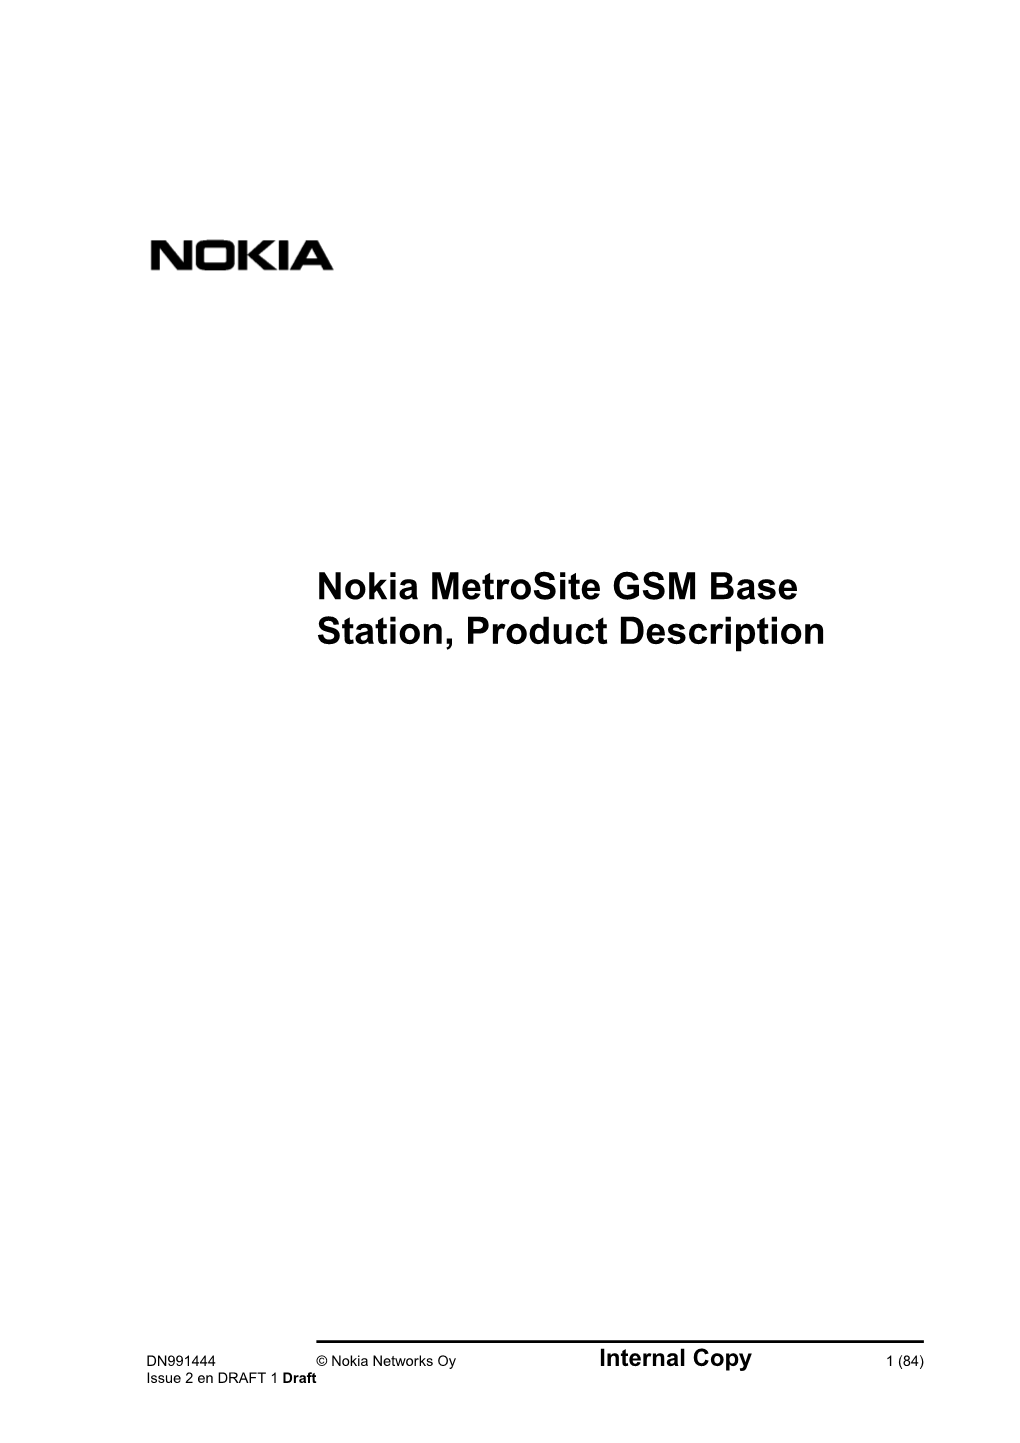 Nokia Metrosite GSM Base Station, Product Description